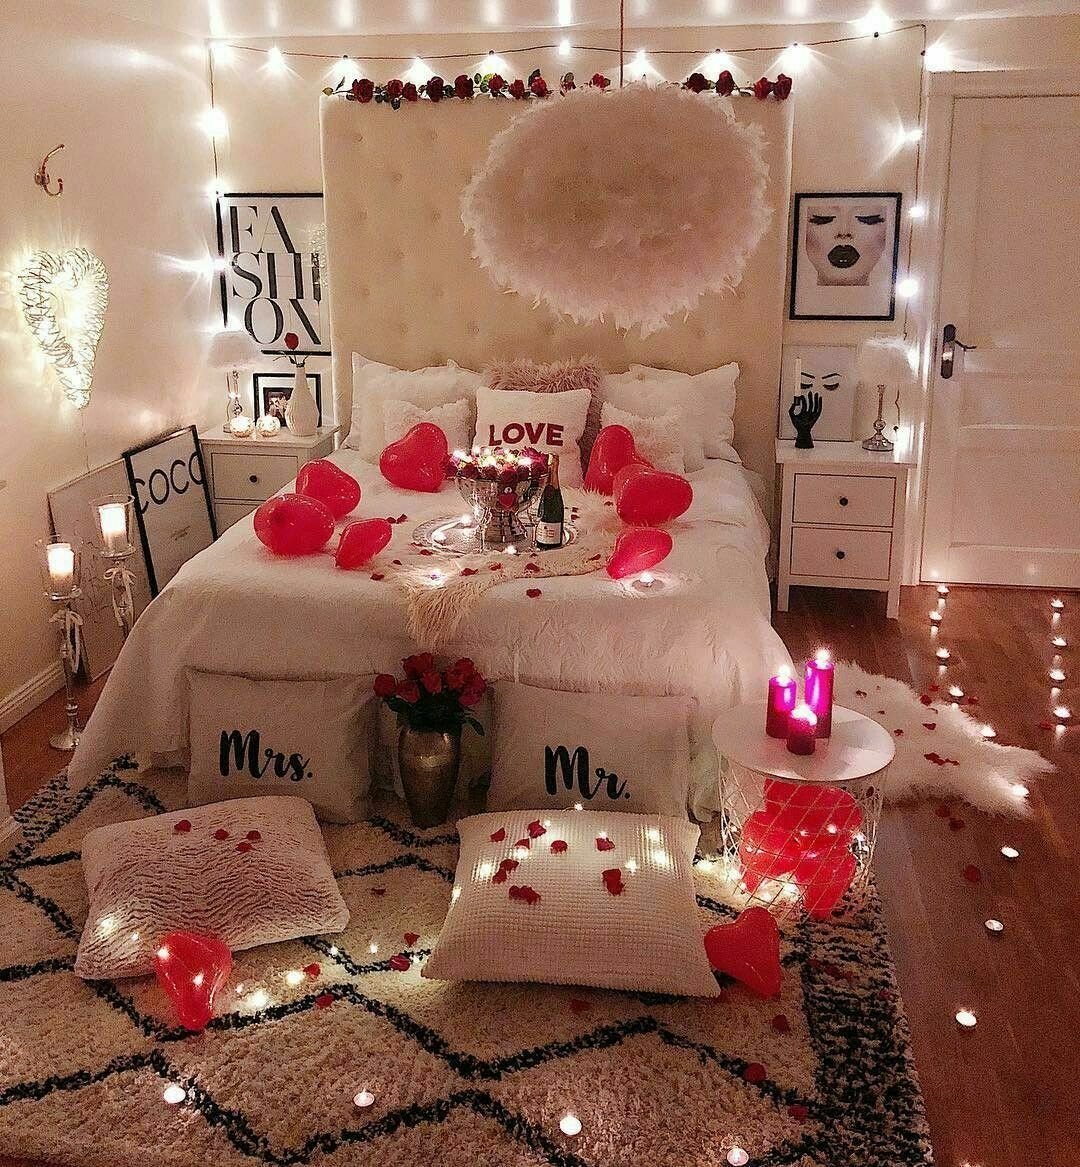 Романтично украсить комнату (31 фото)